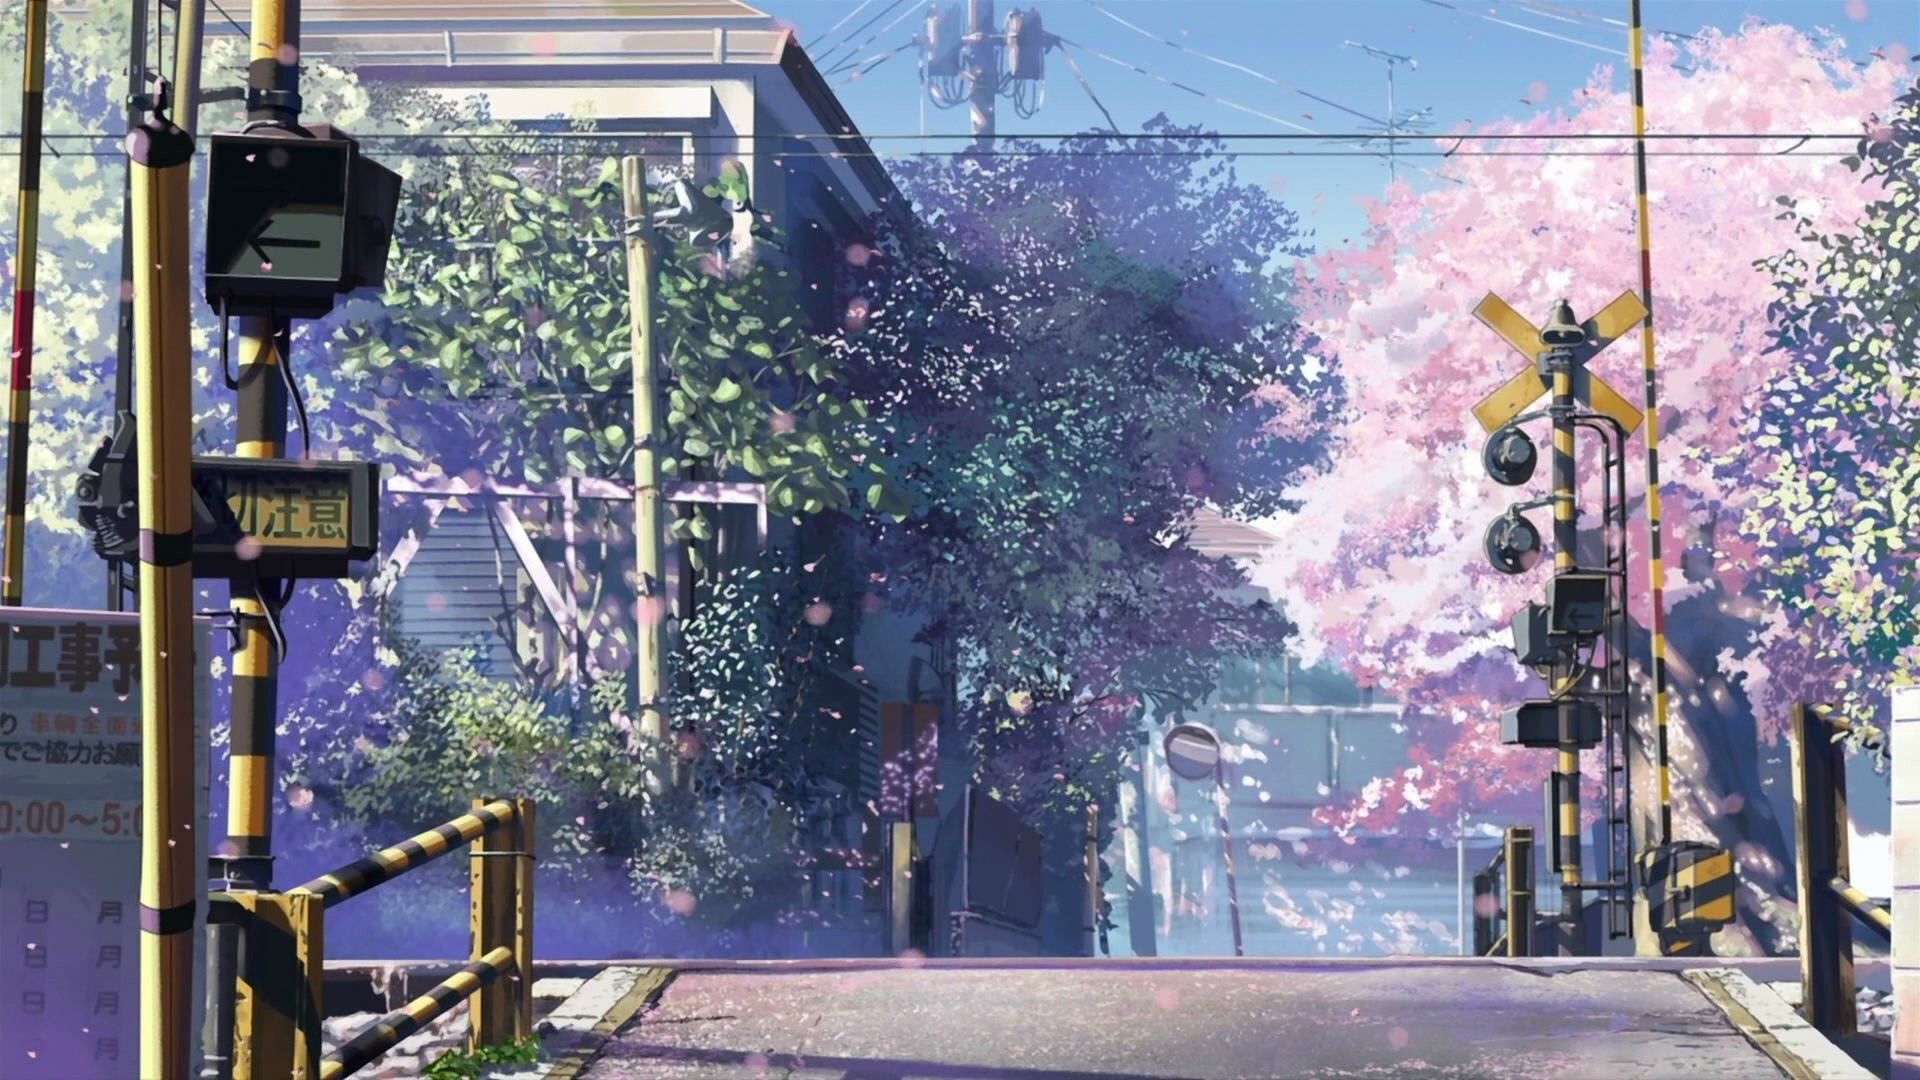 30+] Aesthetic Anime Wallpapers - WallpaperSafari